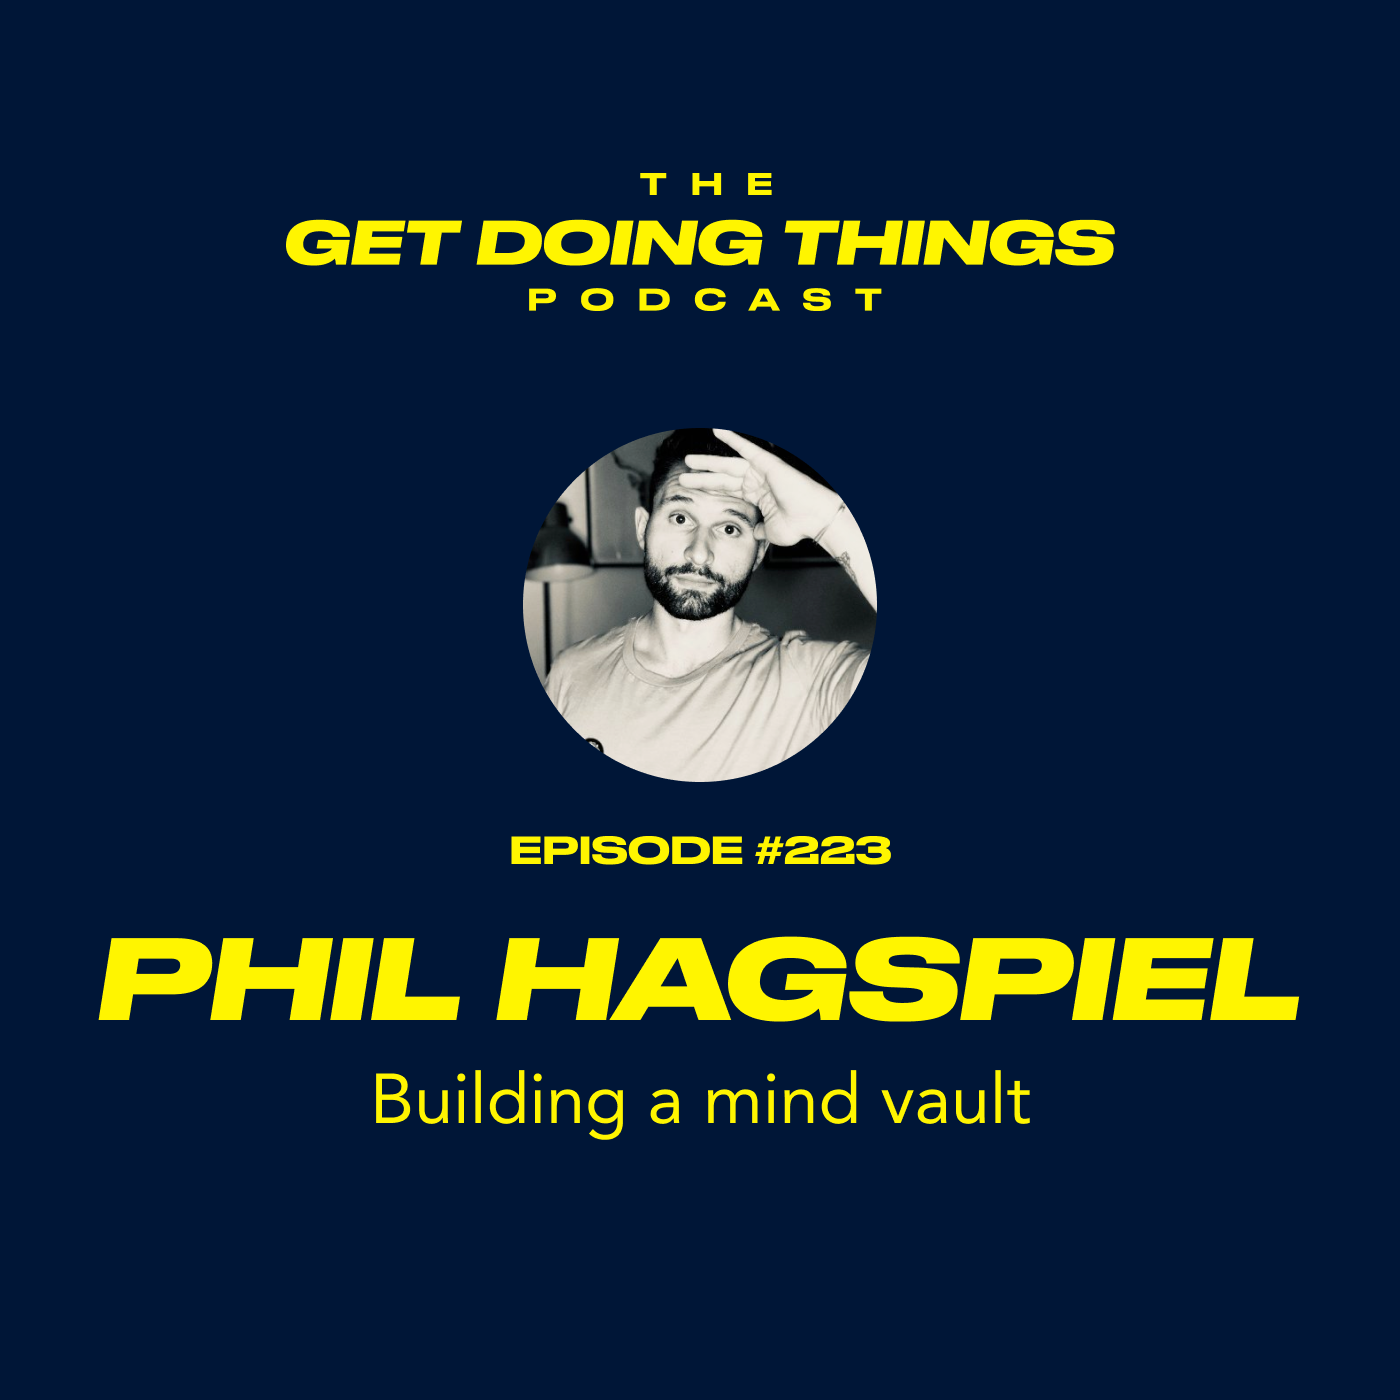 Phil Hagspiel - Building a mind vault